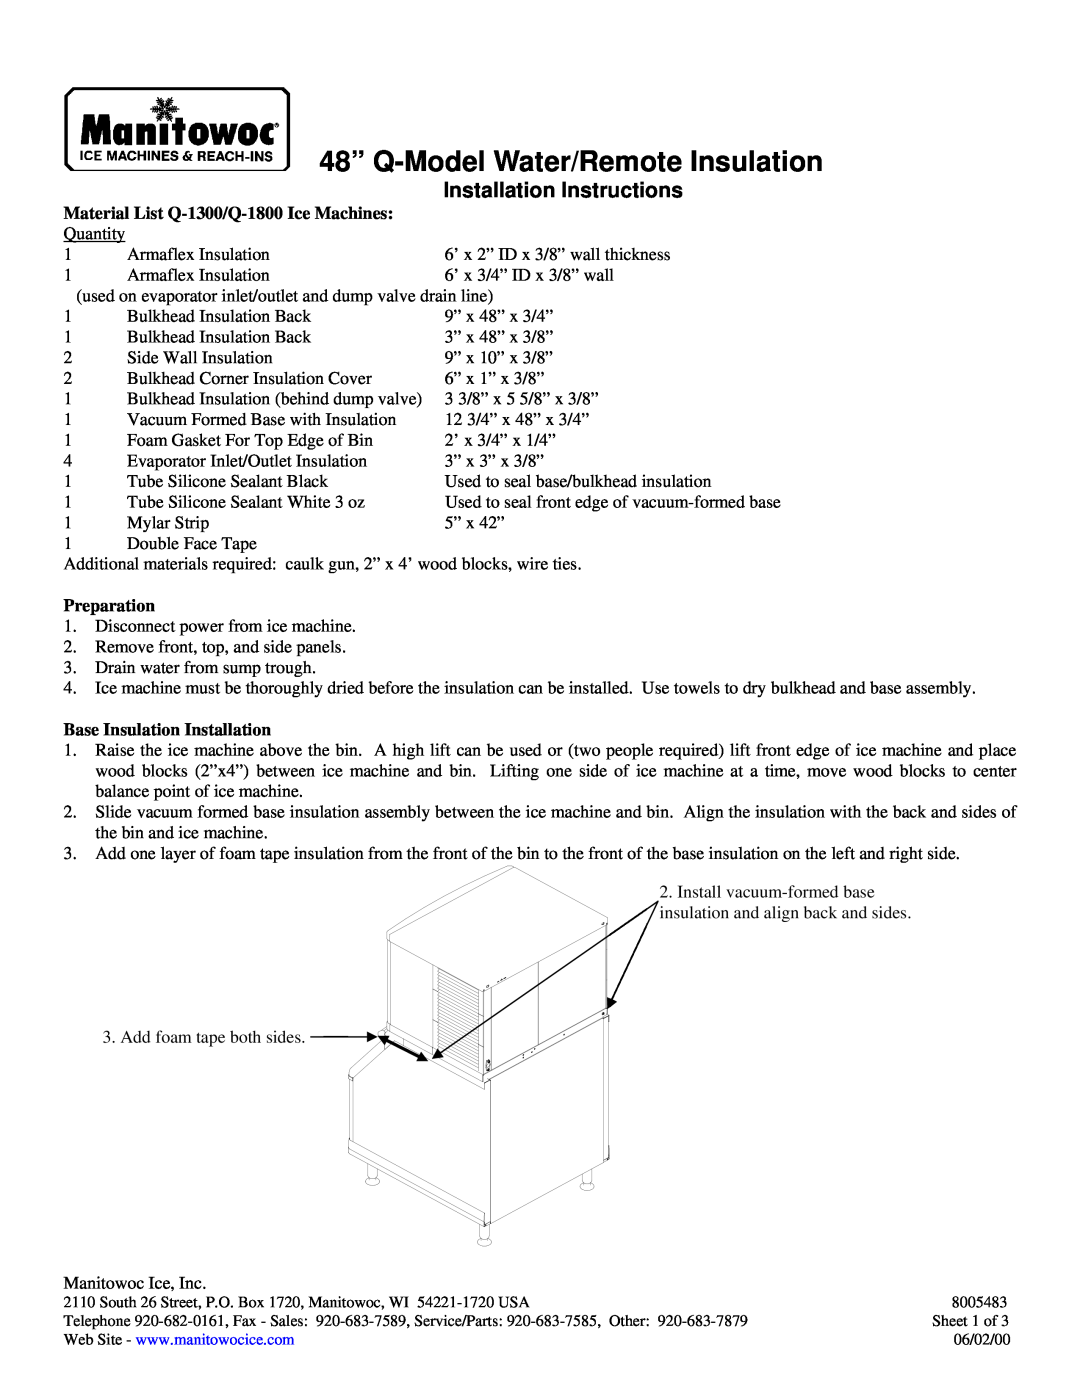 Manitowoc Ice installation instructions Material List Q-1300/Q-1800 Ice Machines, Preparation 